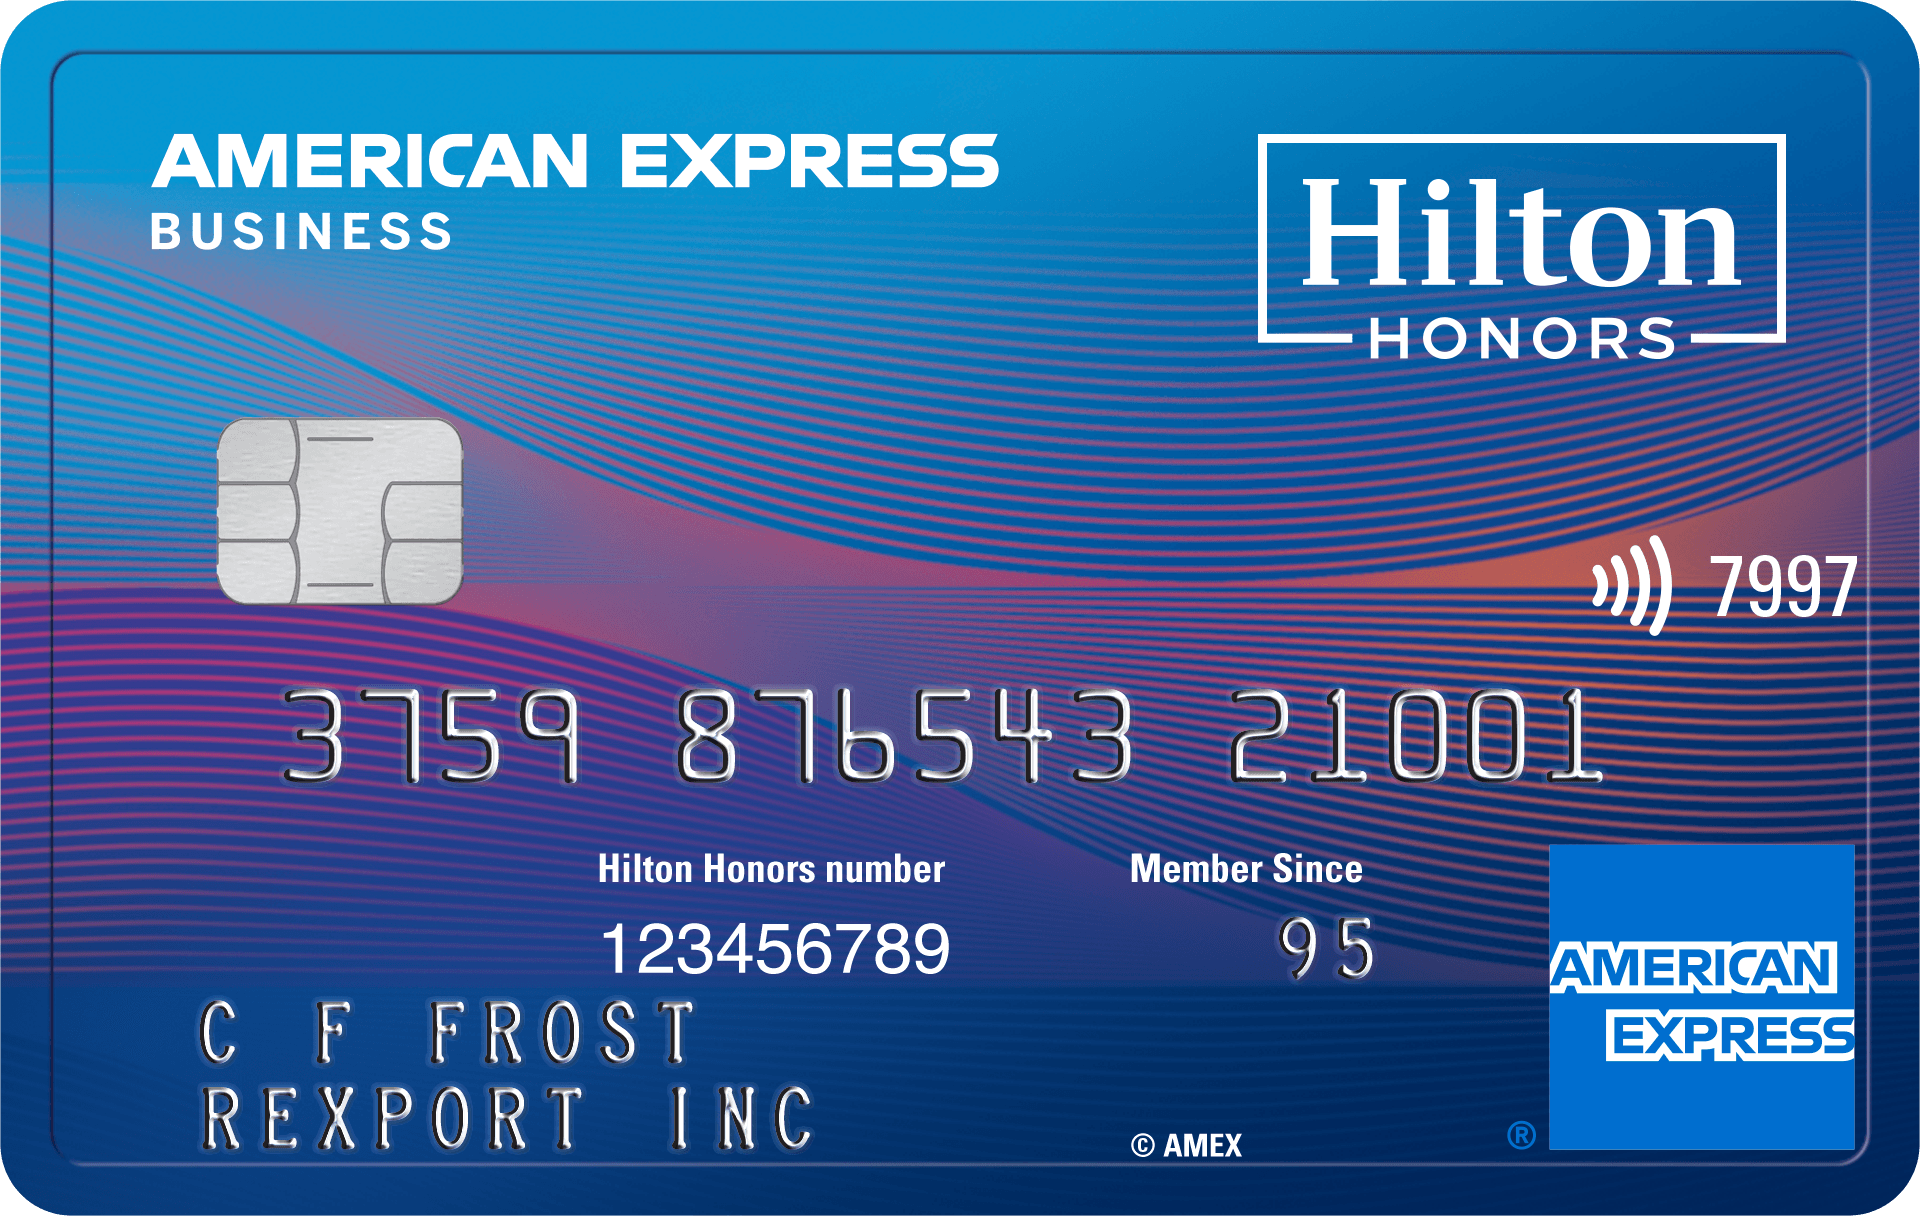 Hilton Honors Business Card, 칩 내장, 비접촉식 탭 결제 가능